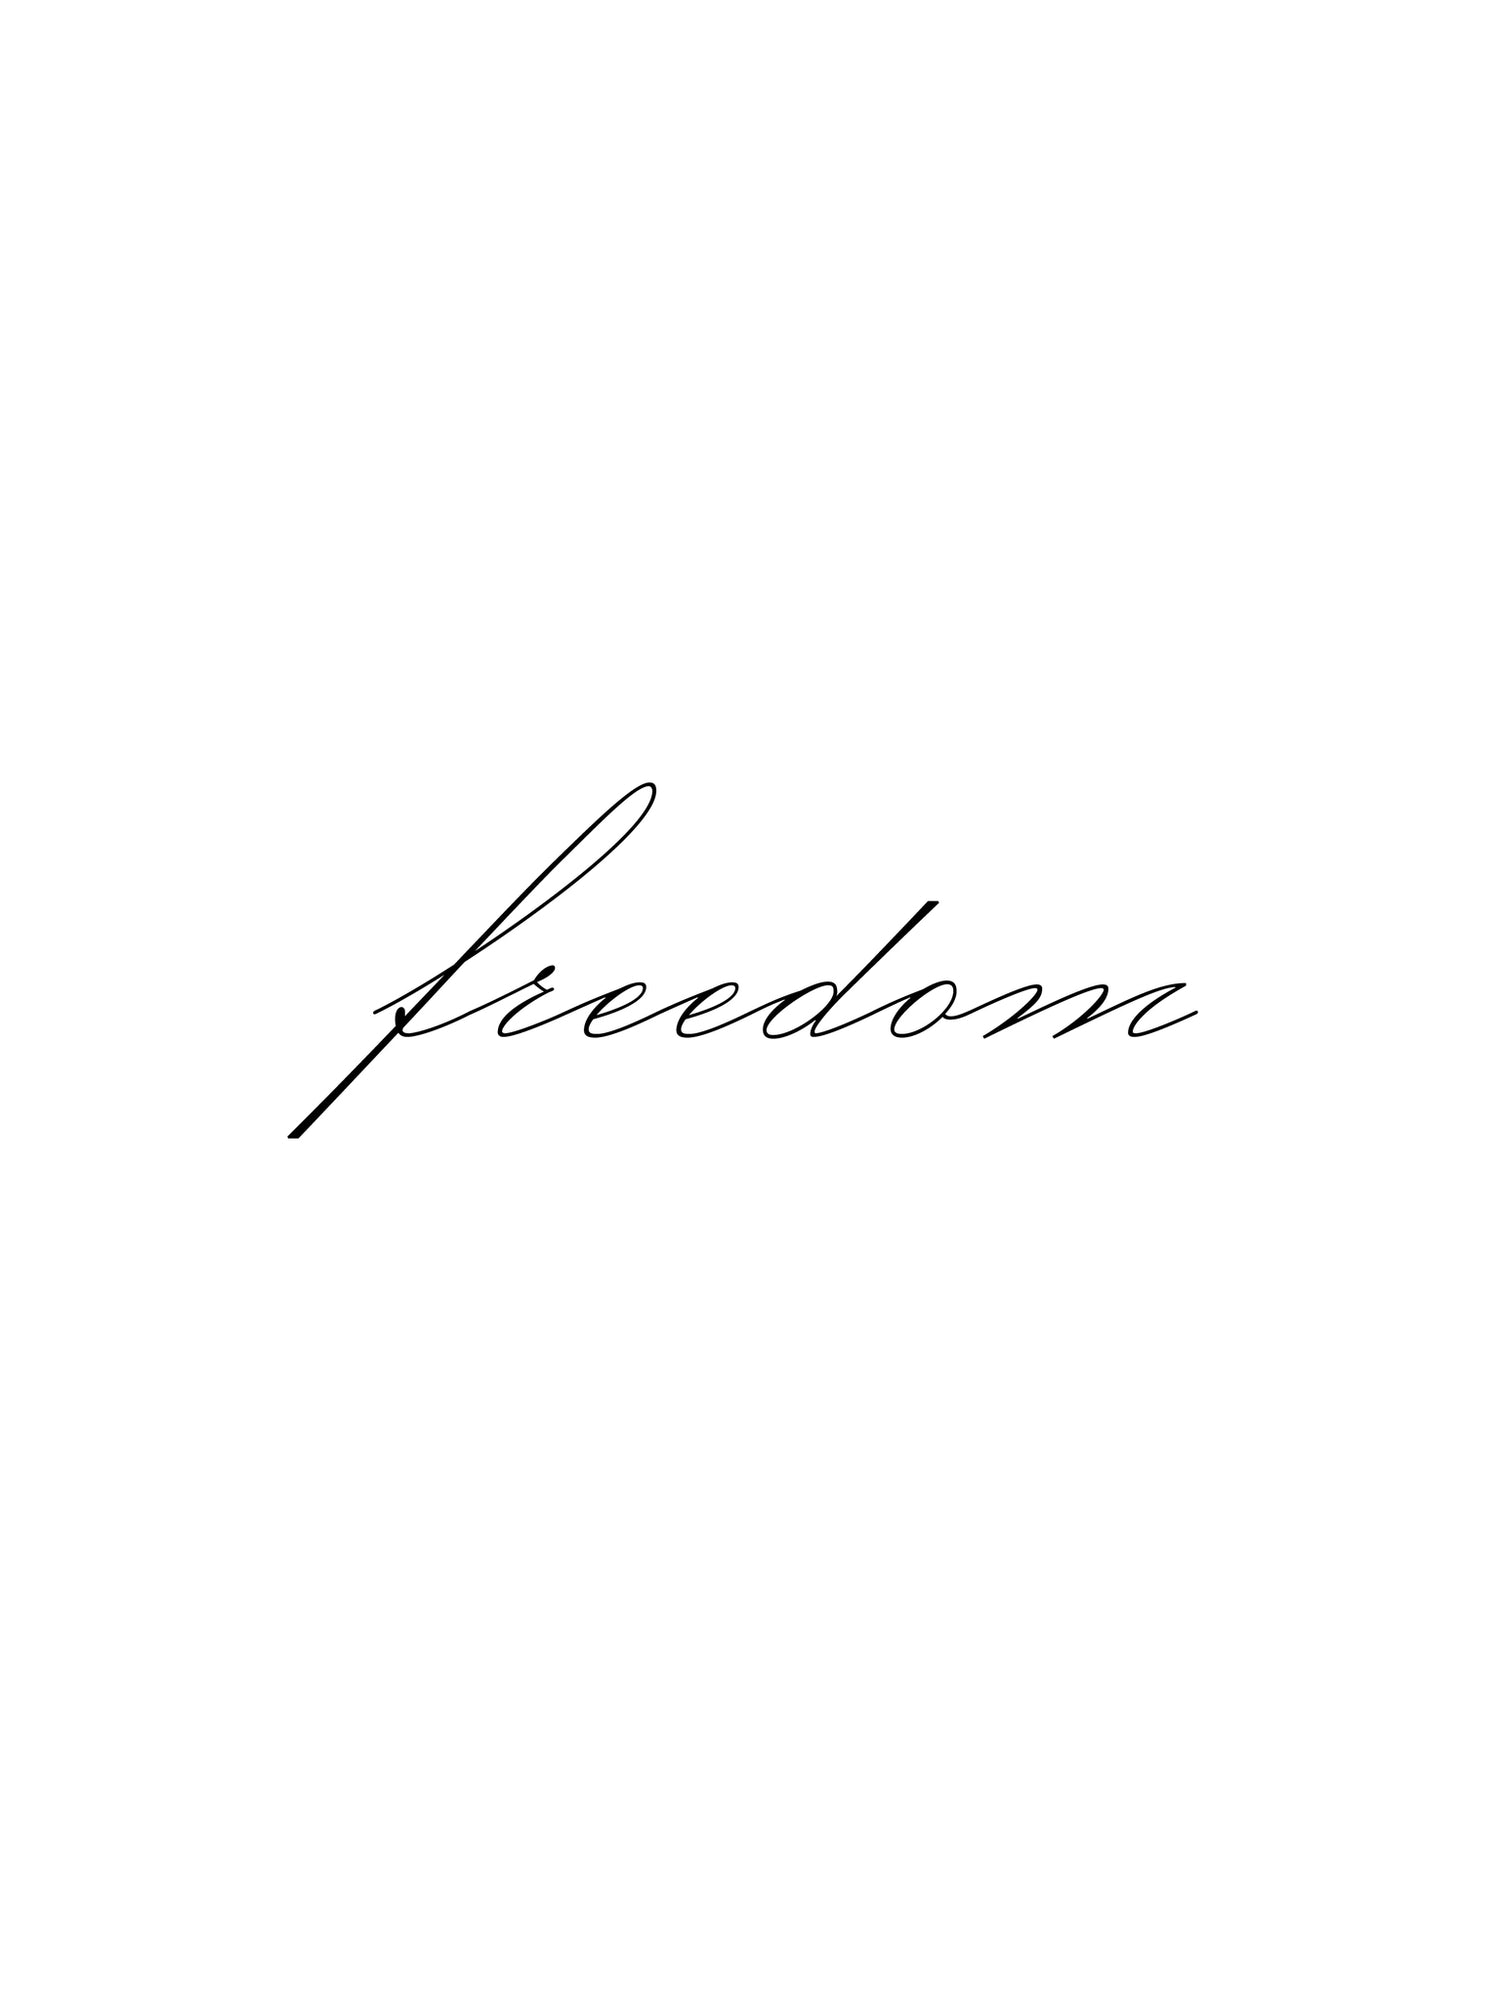 freedom line